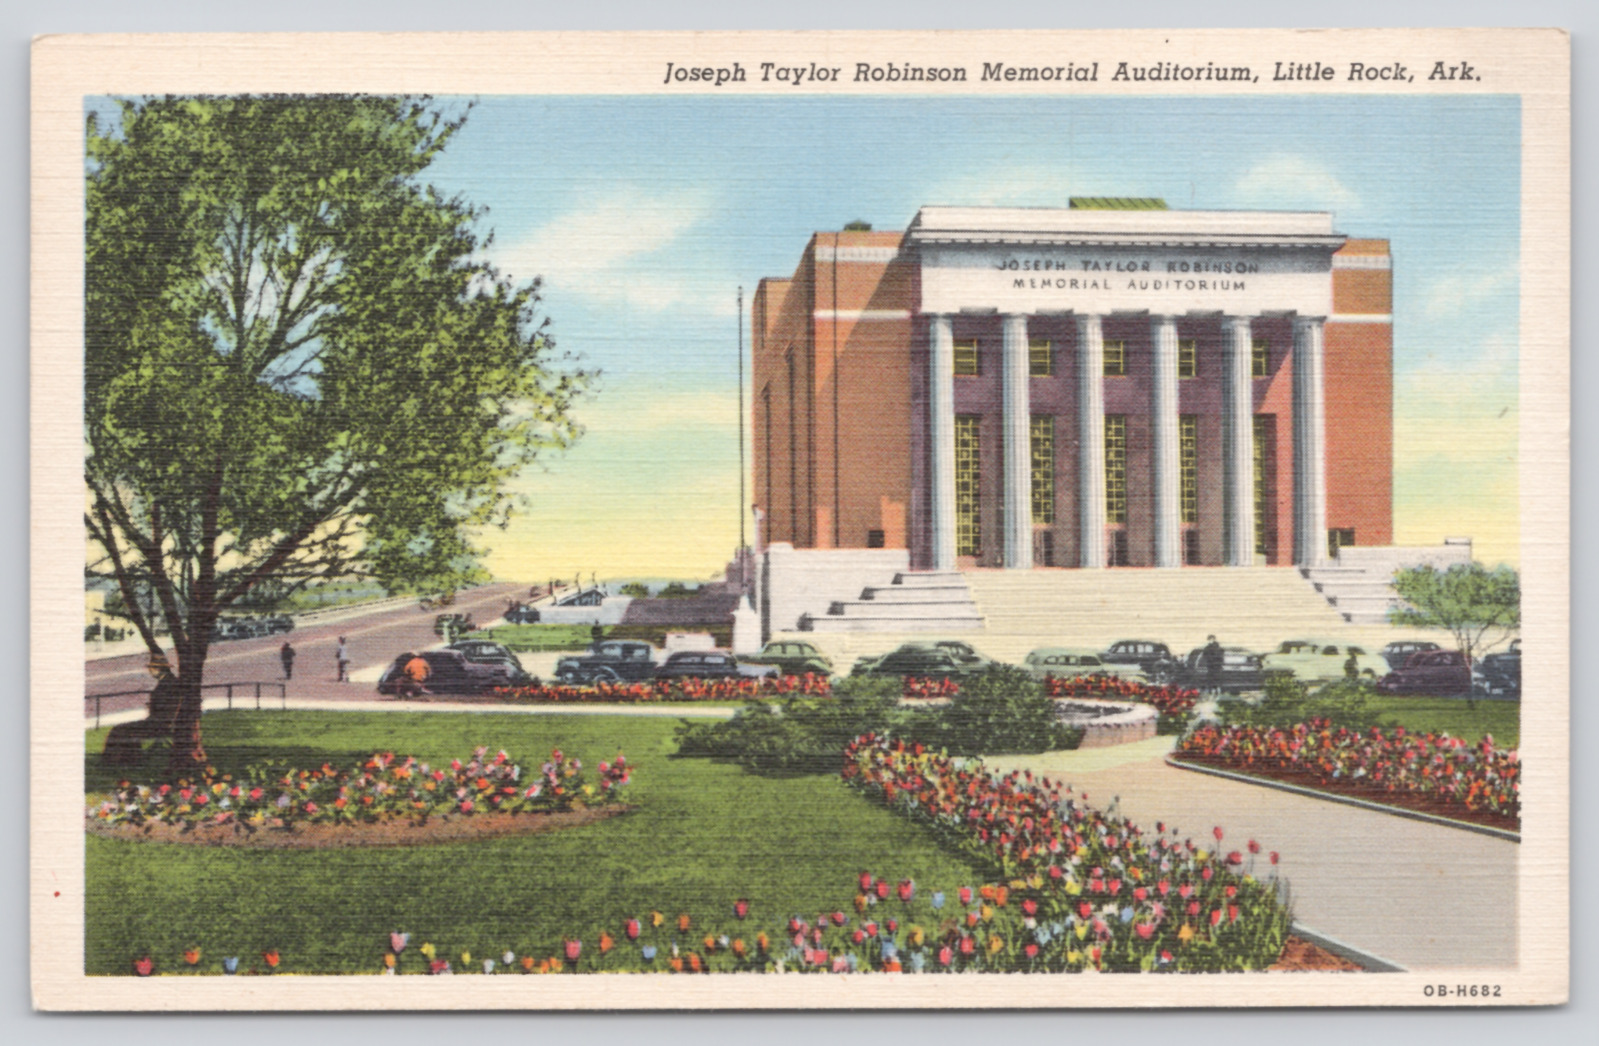 Robinson Center Music Hall, Statehouse Plaza Little Rock AK c1930 Postcard